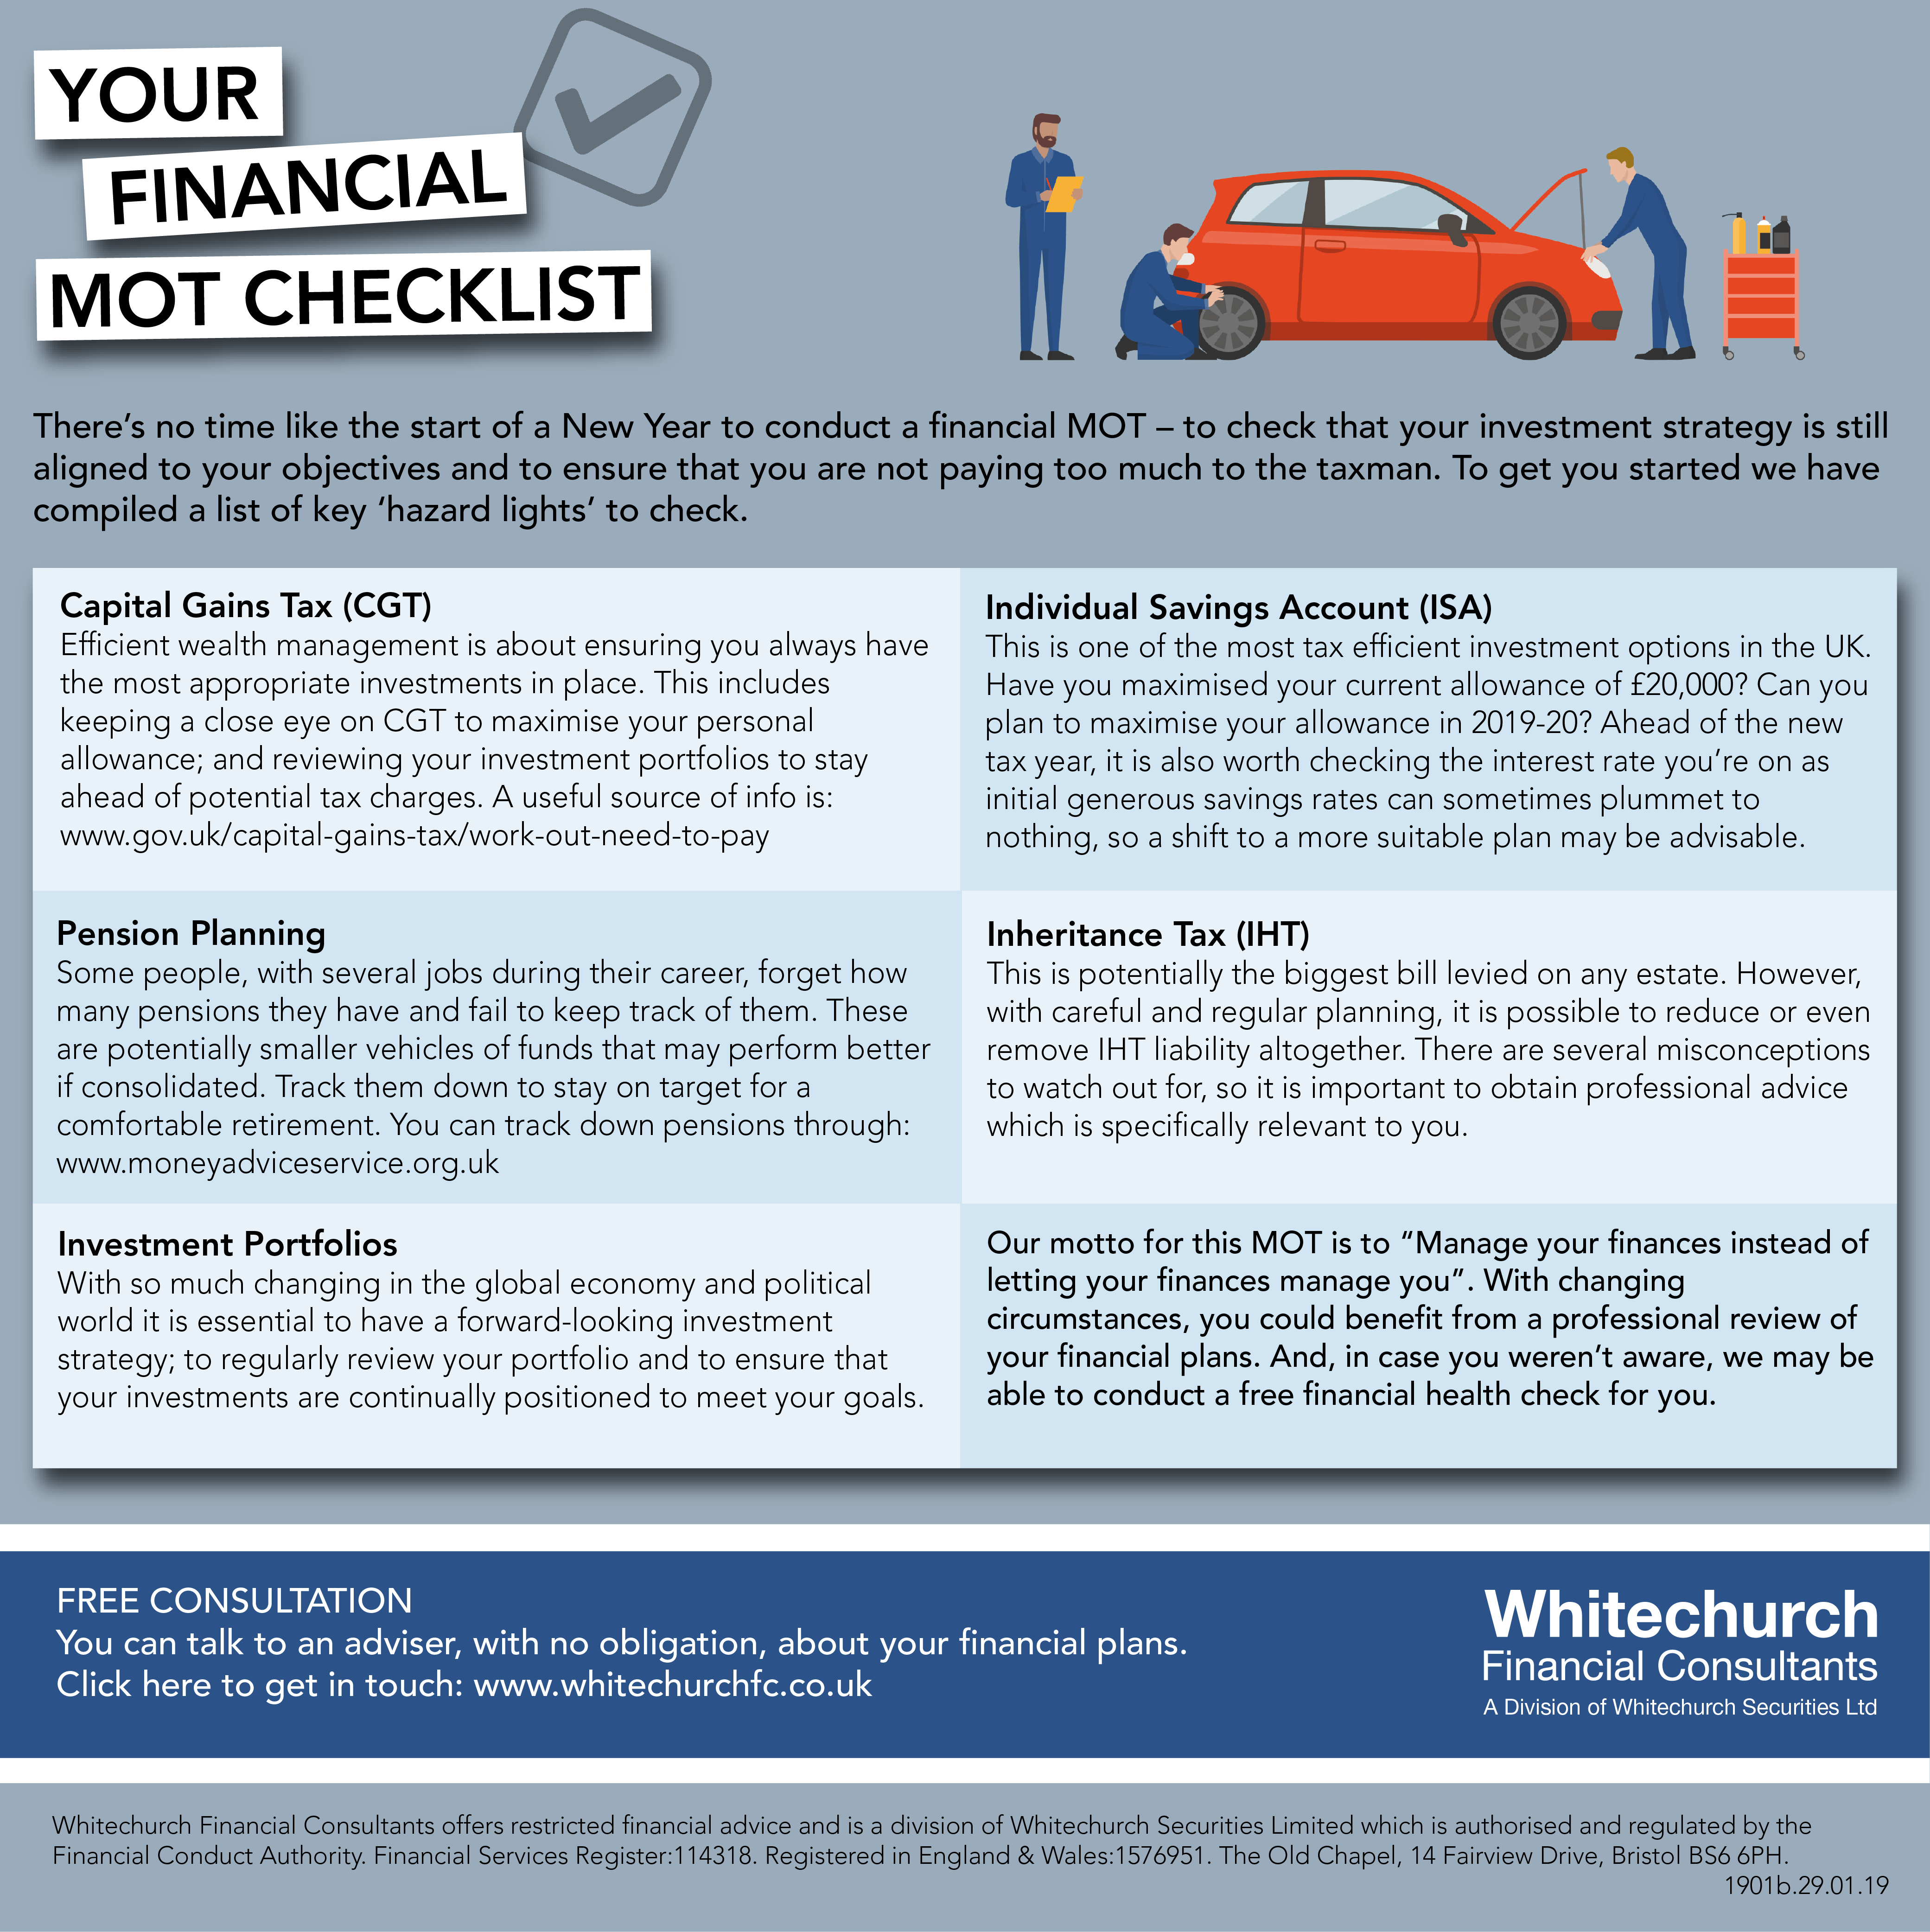 Whitechurch Financial Consultants: Your financial MOT checklist